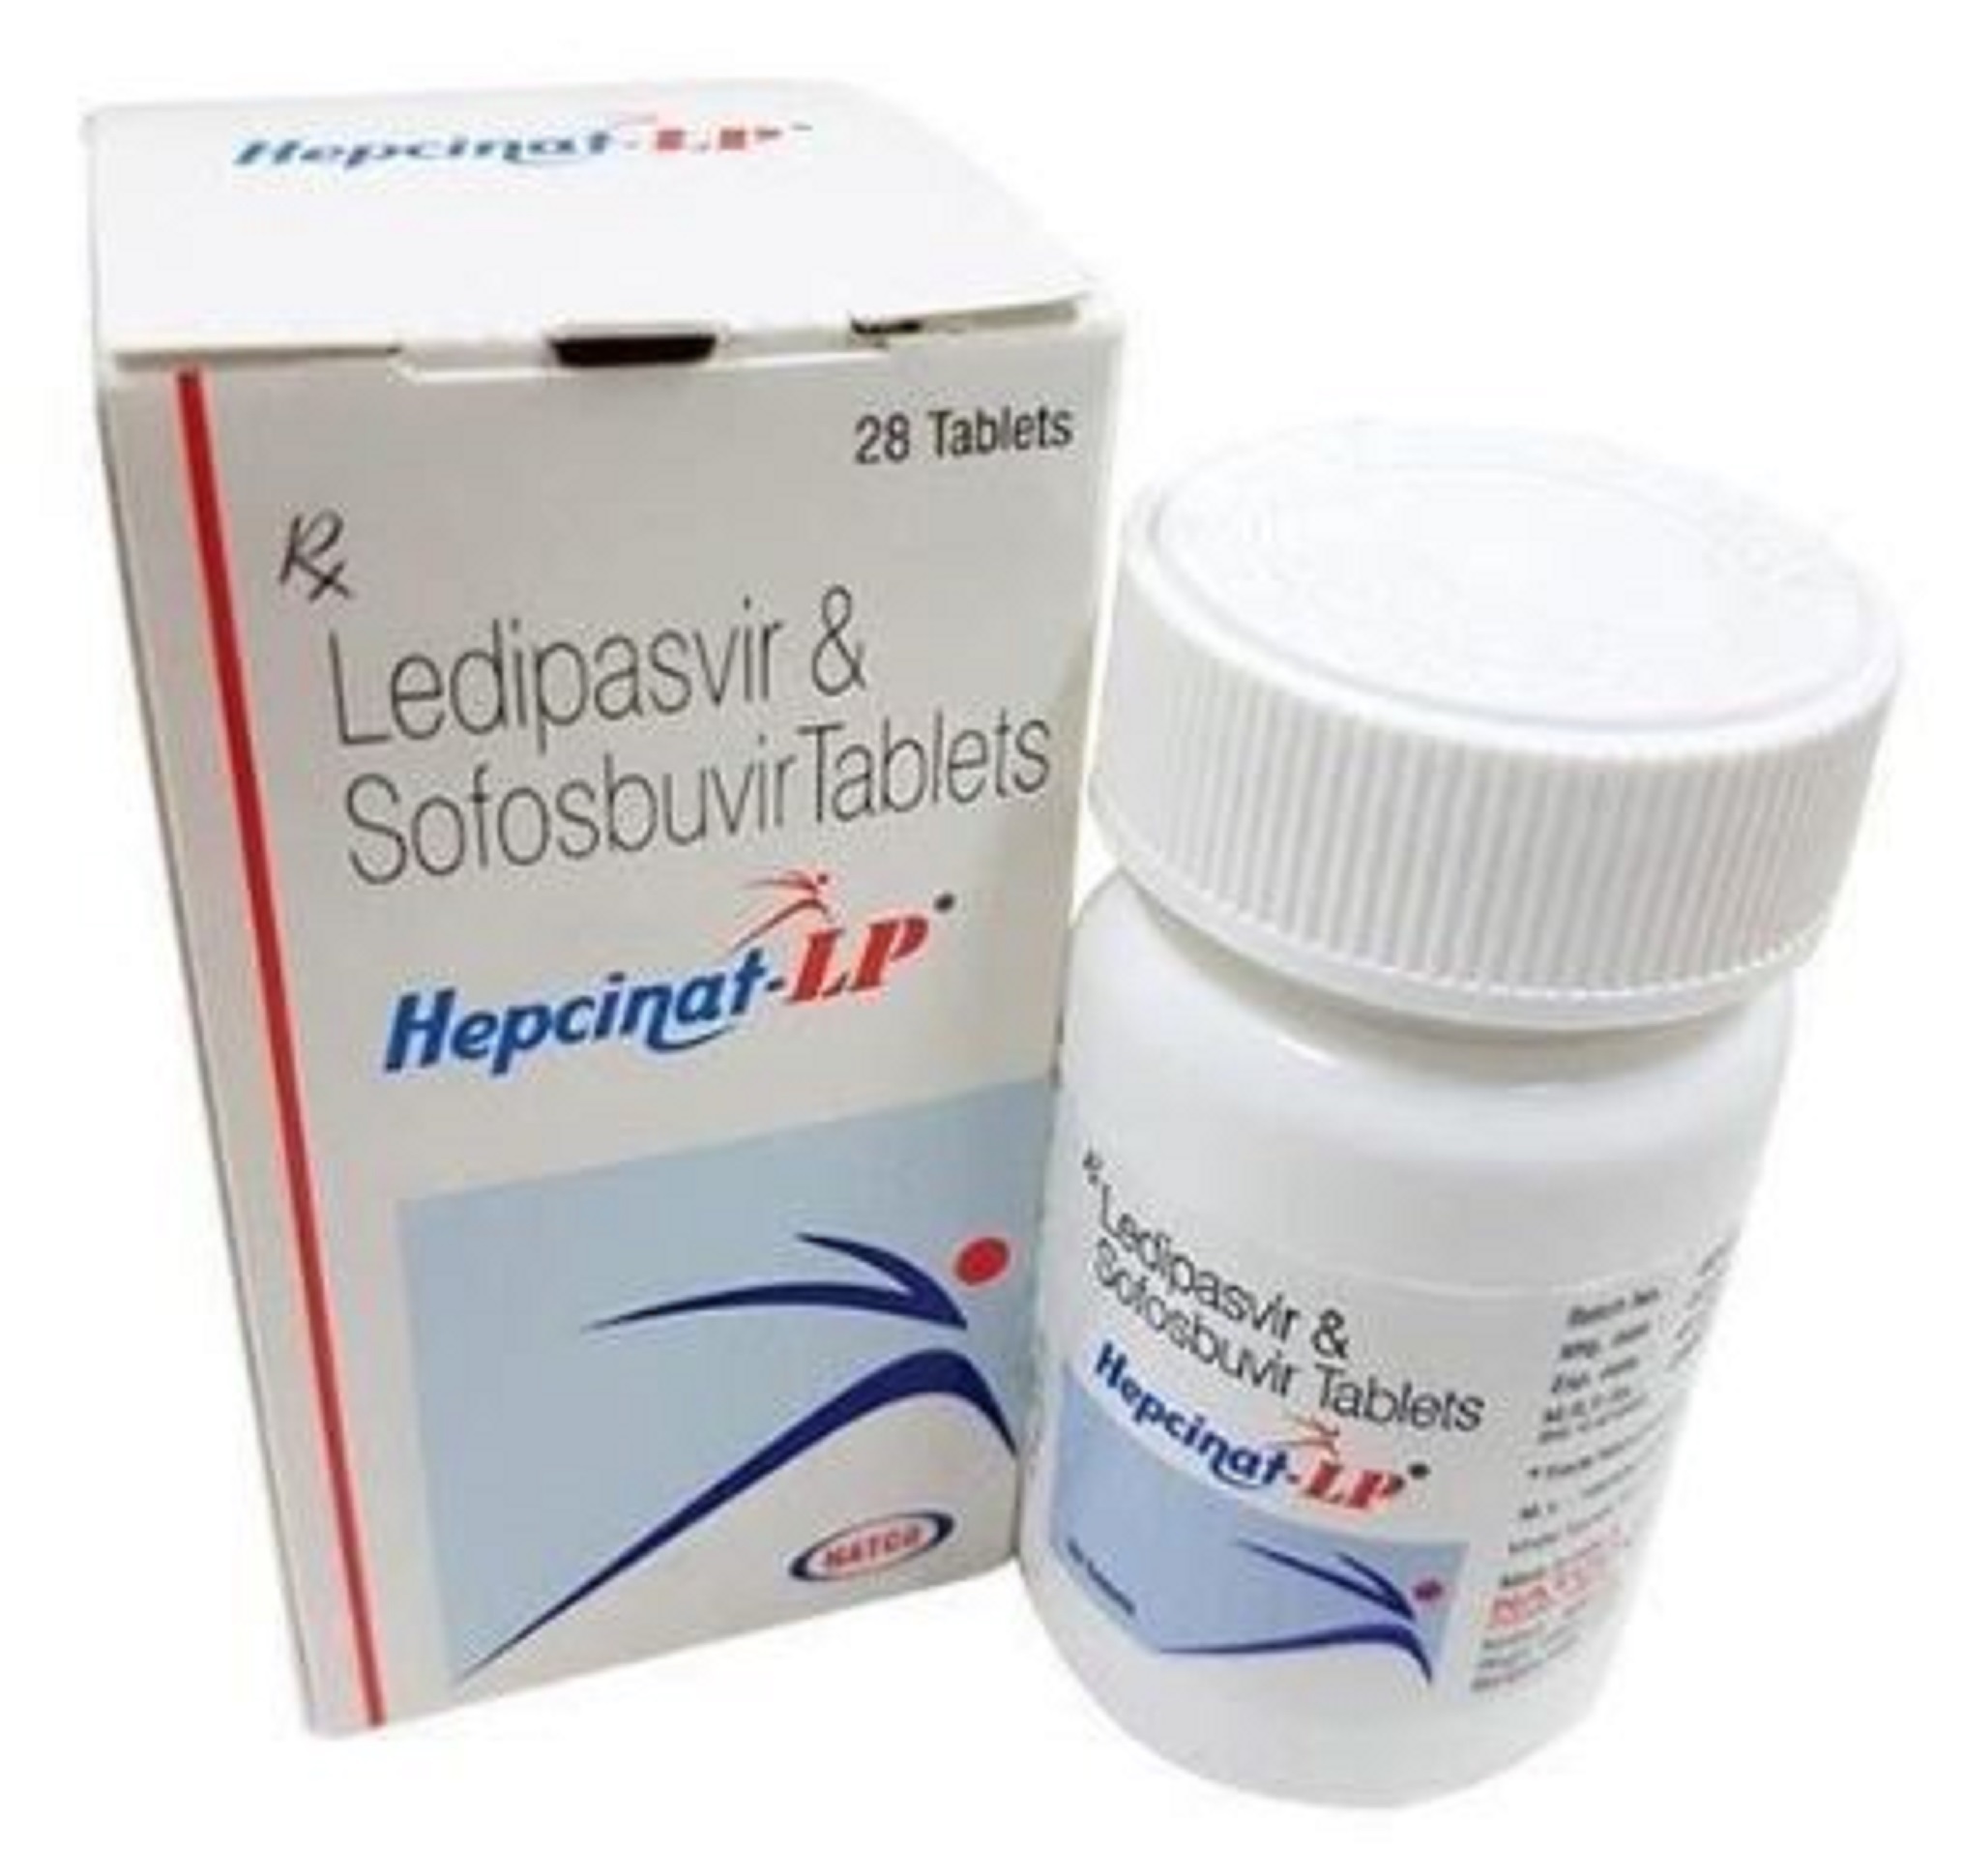 HEPCINAT LP SOFOSBUVIR LEDIPASVIR TABLETS